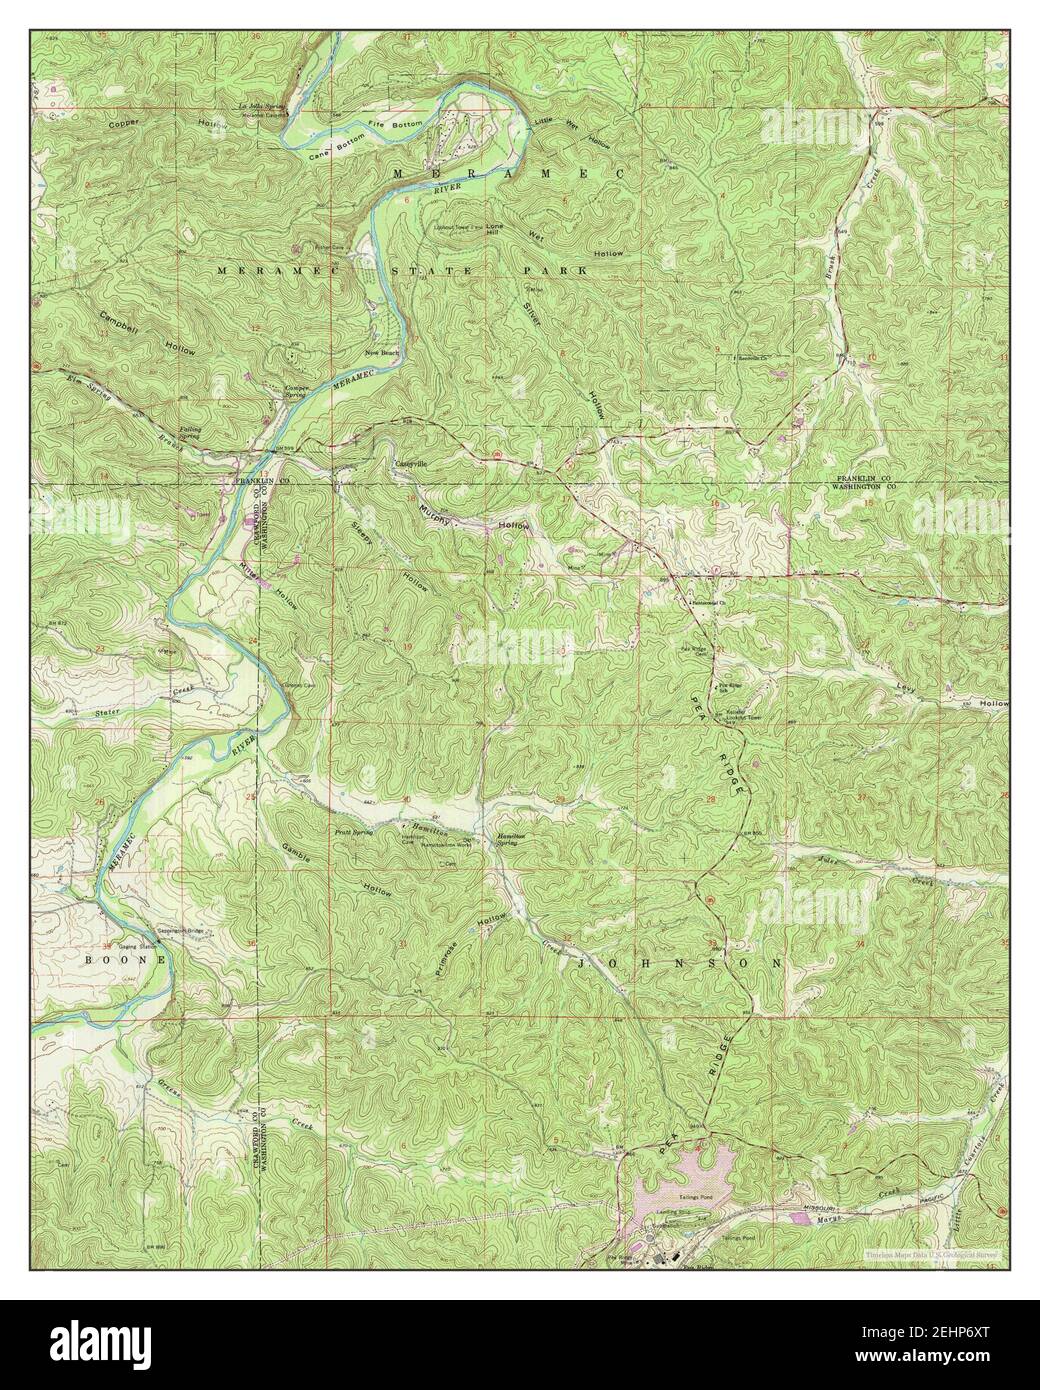 Meramec state Park, Missouri, map 1969, 1:24000, United States of America by Timeless Maps, data U.S. Geological Survey Foto Stock